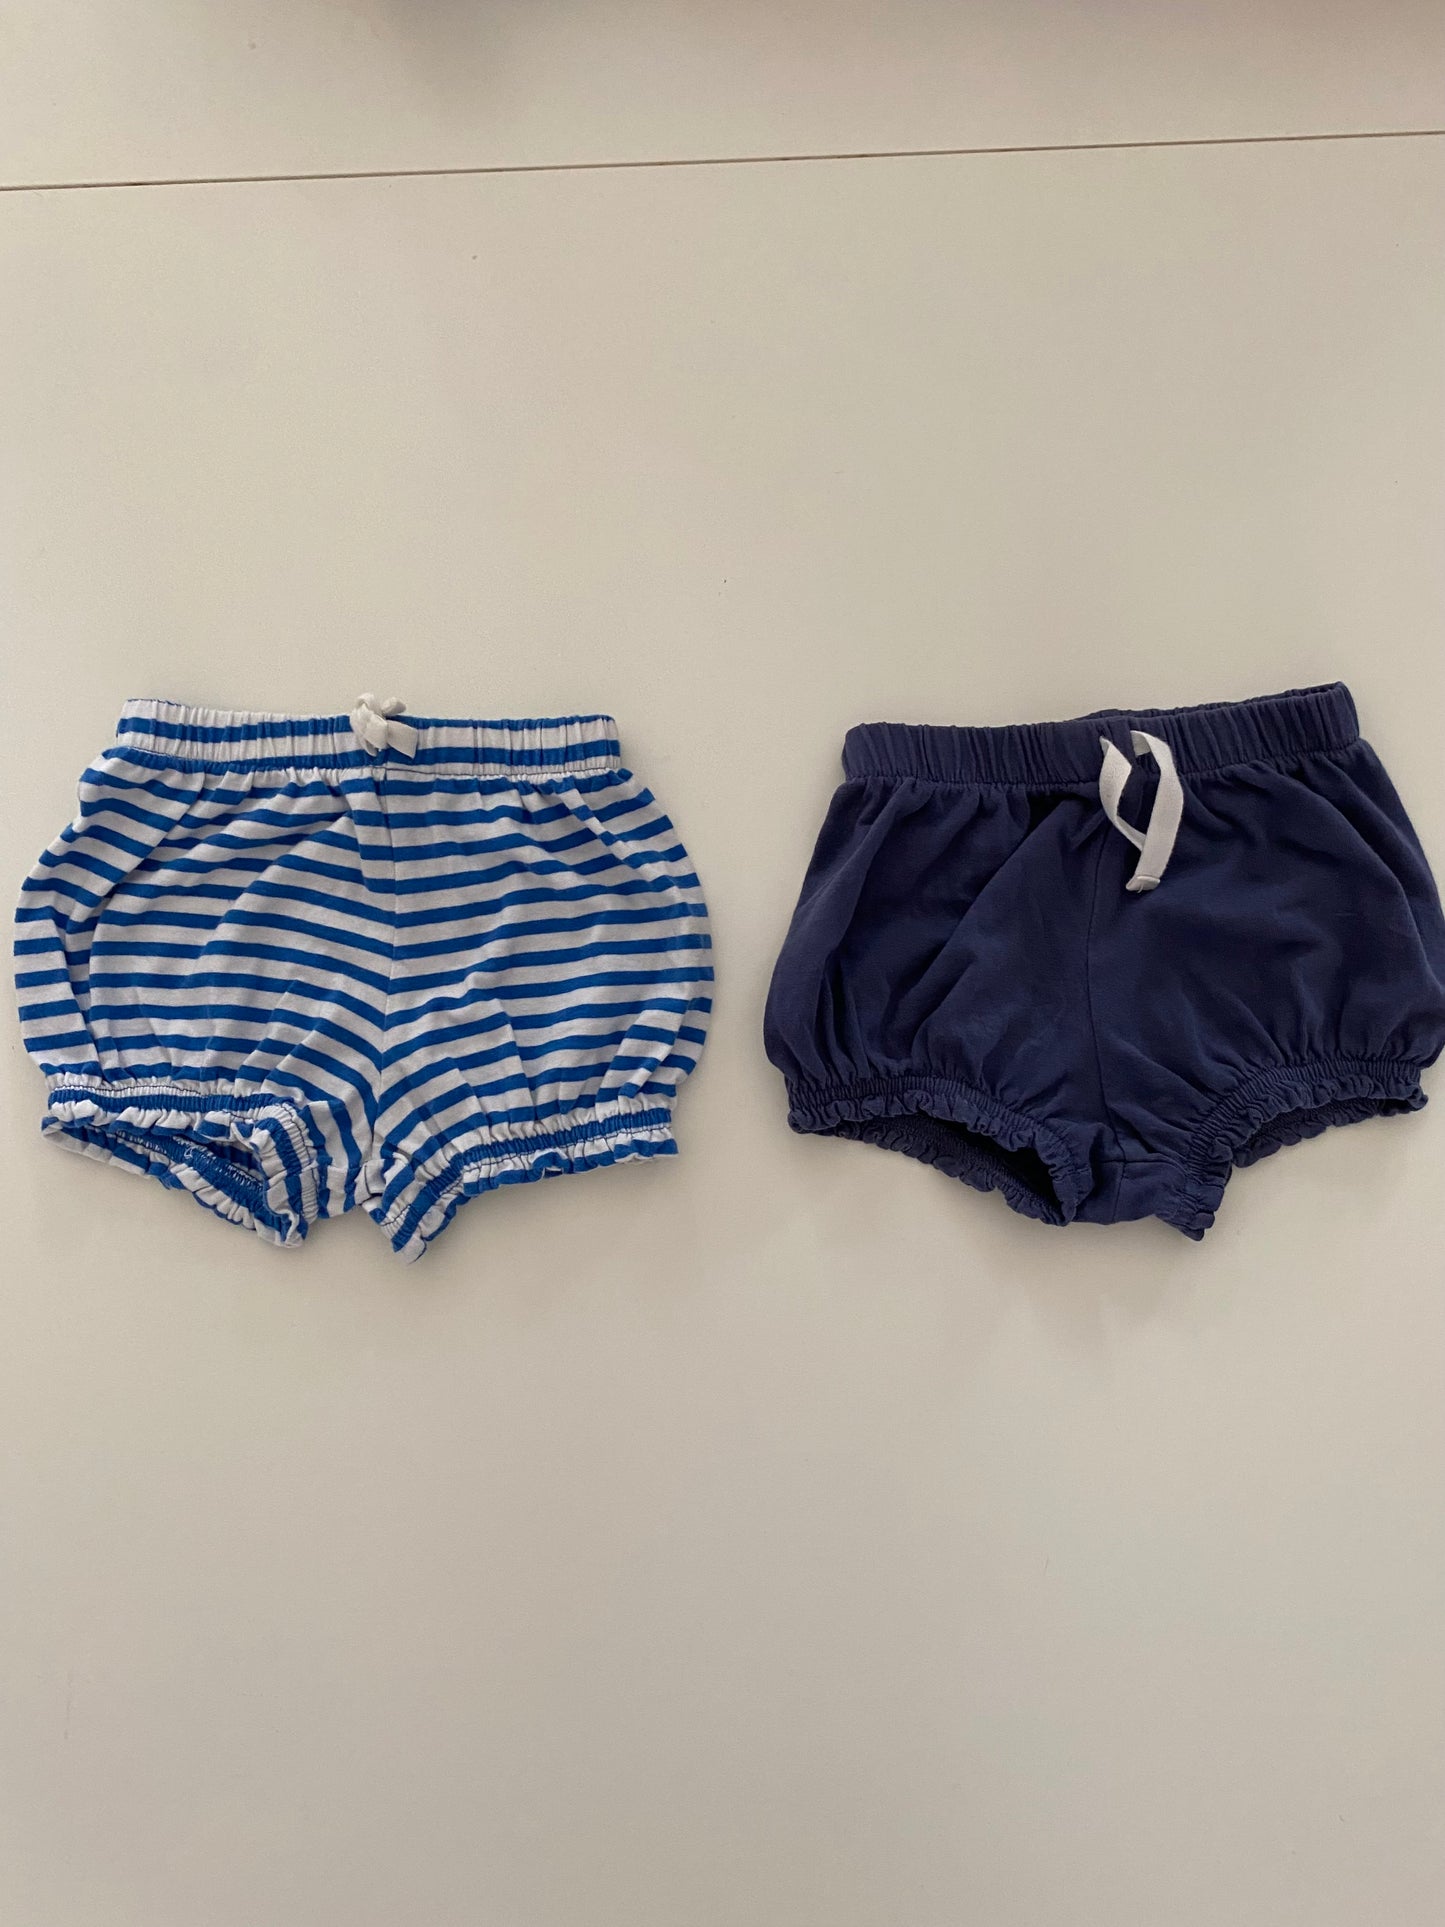 Primary Bubble Short Bundle Girls 12-18M navy and blue stripe shorts